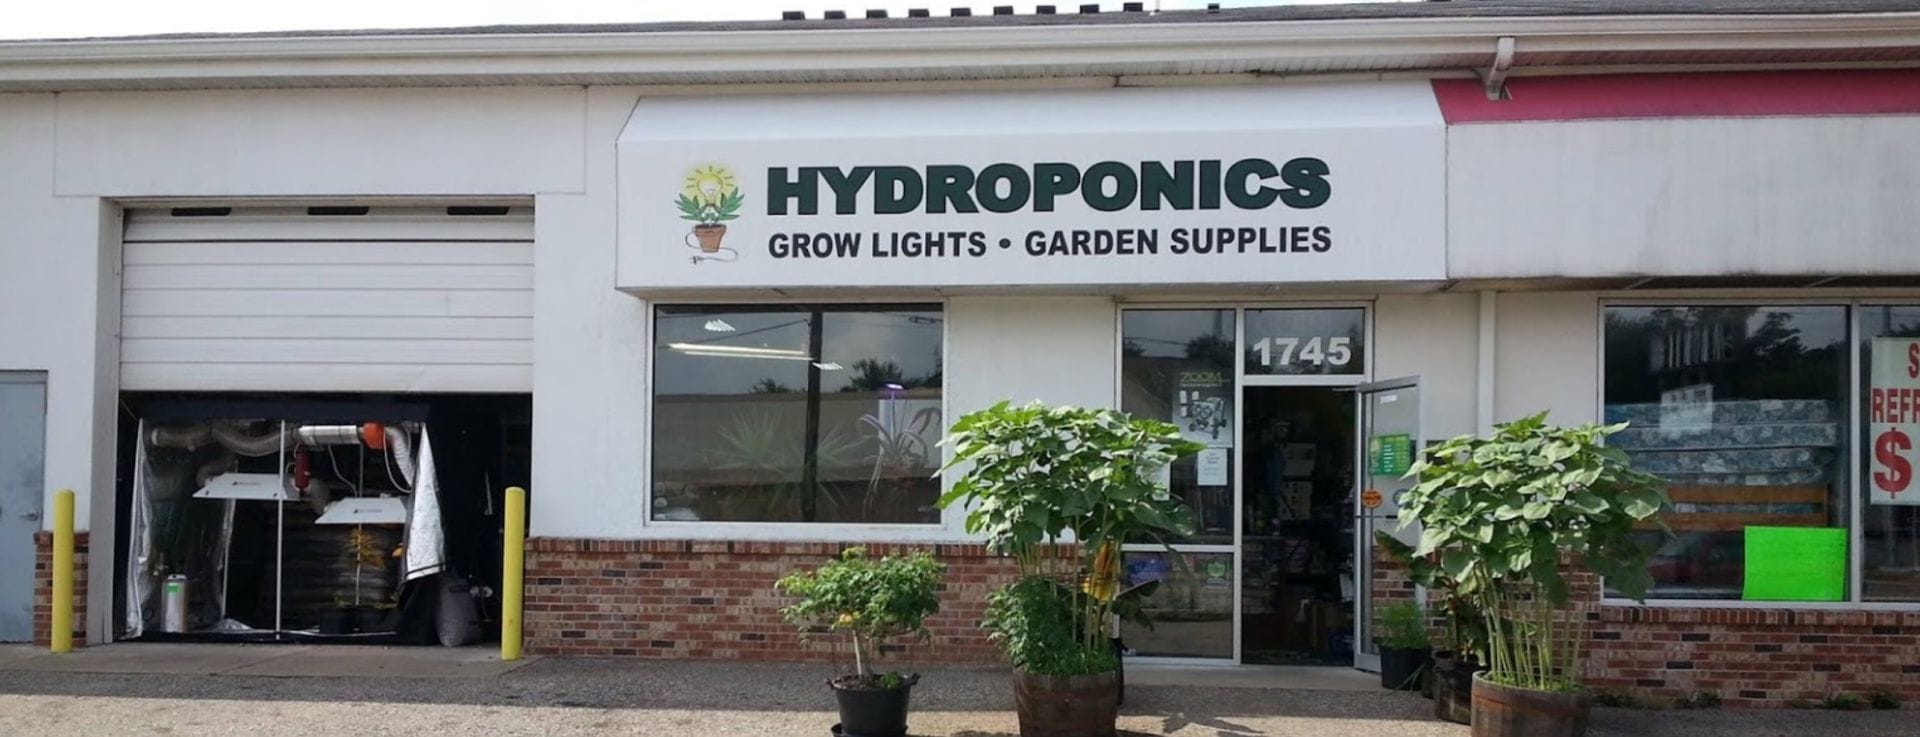 HTG Metal Herb Grinder  HTG Supply Hydroponics & Grow Lights